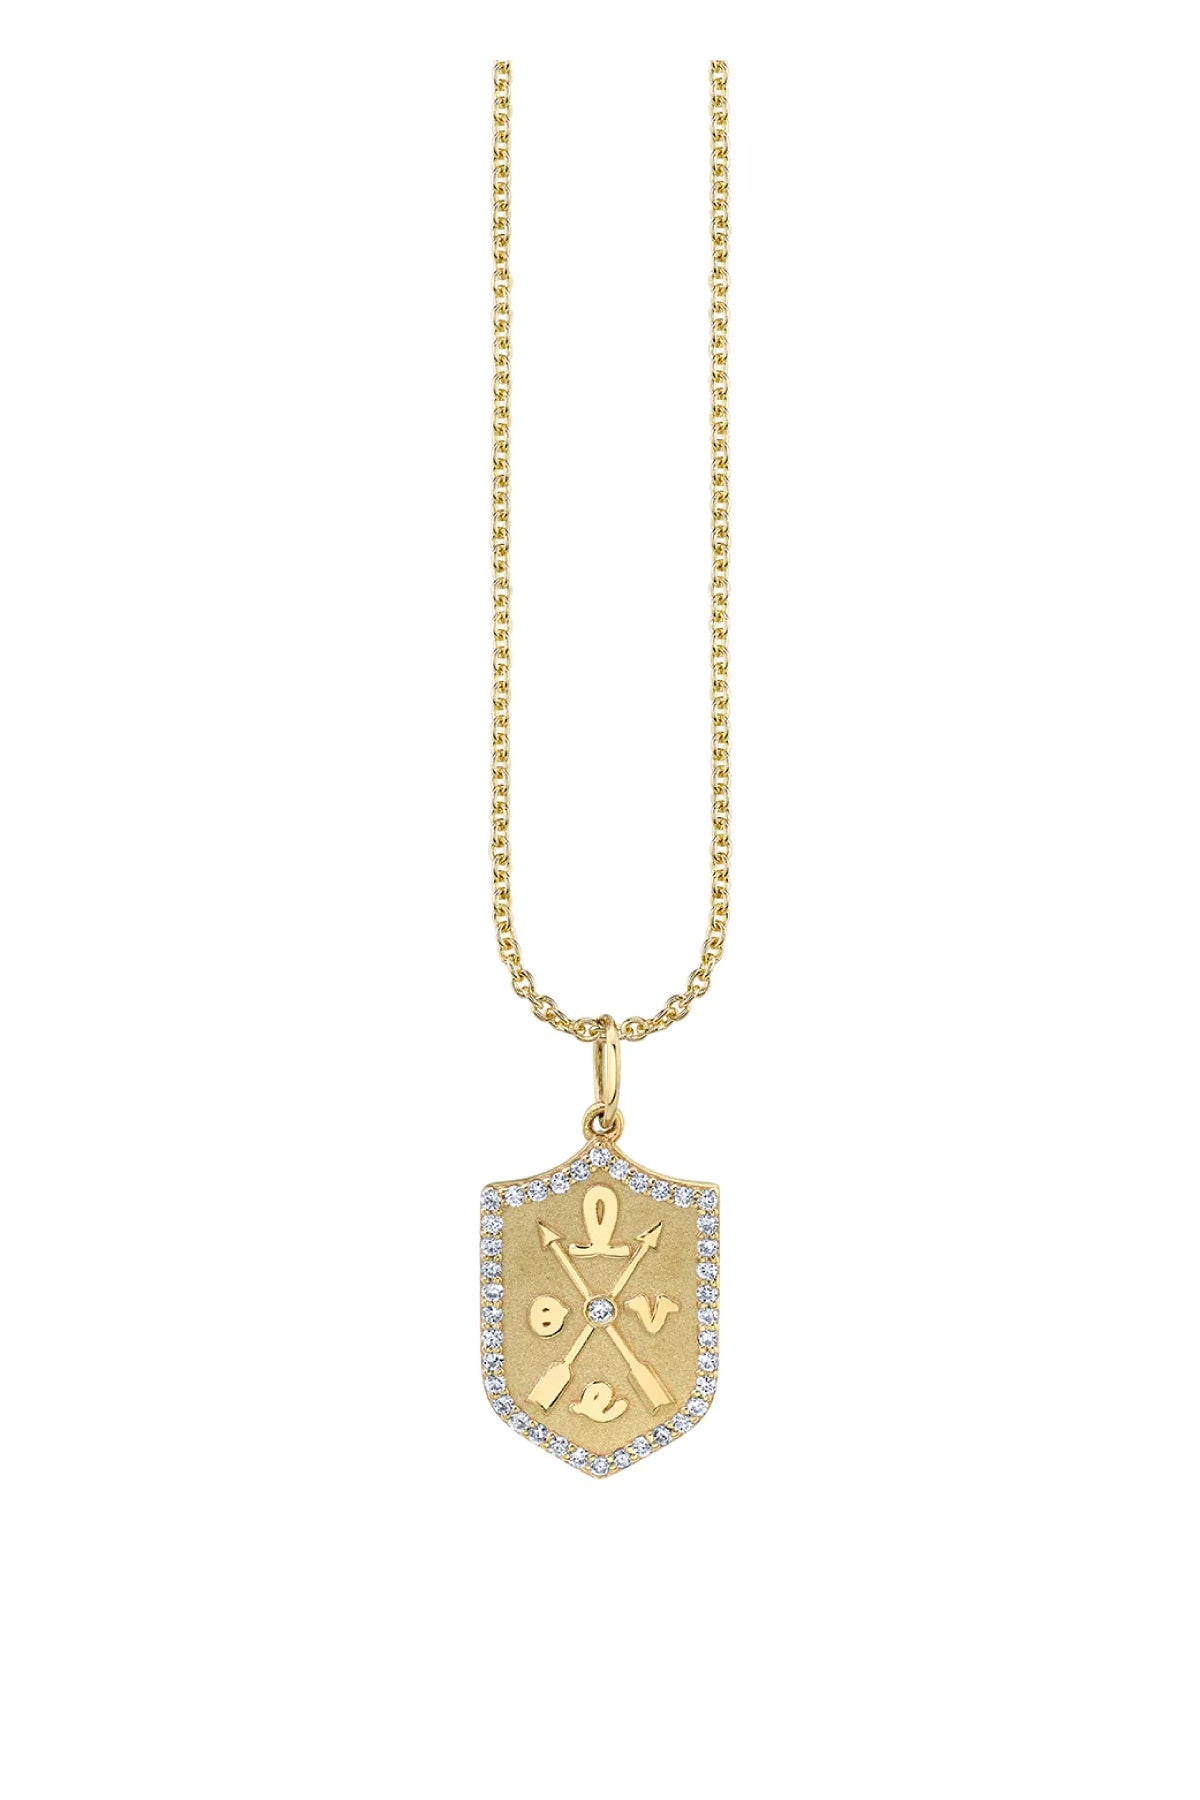 Sydney Evan Small Love Script Pave Diamond Border Crest Charm Necklace - Yellow Gold